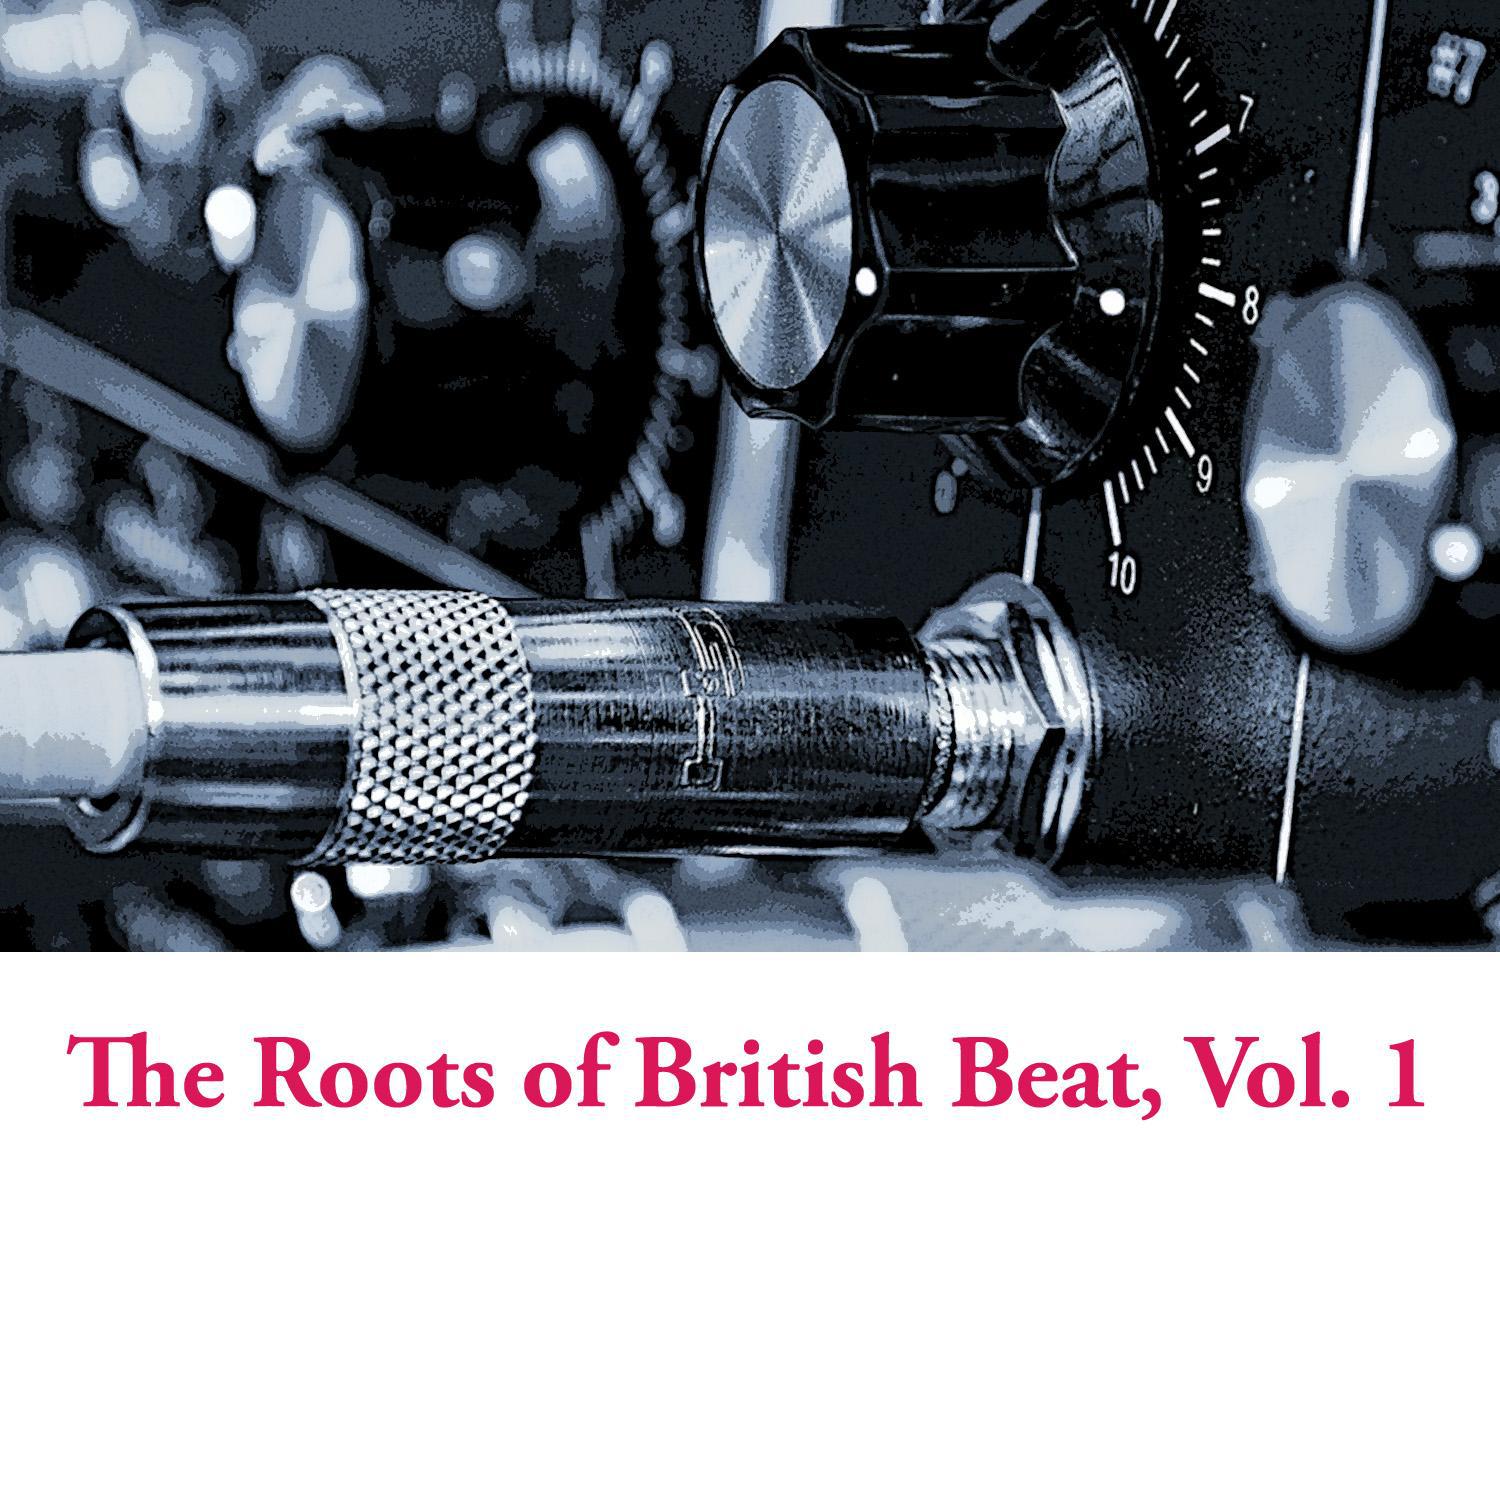 My Bonnie歌词 歌手Tony Sheridan / The Beatles-专辑The Roots of British Beat, Vol. 1-单曲《My Bonnie》LRC歌词下载